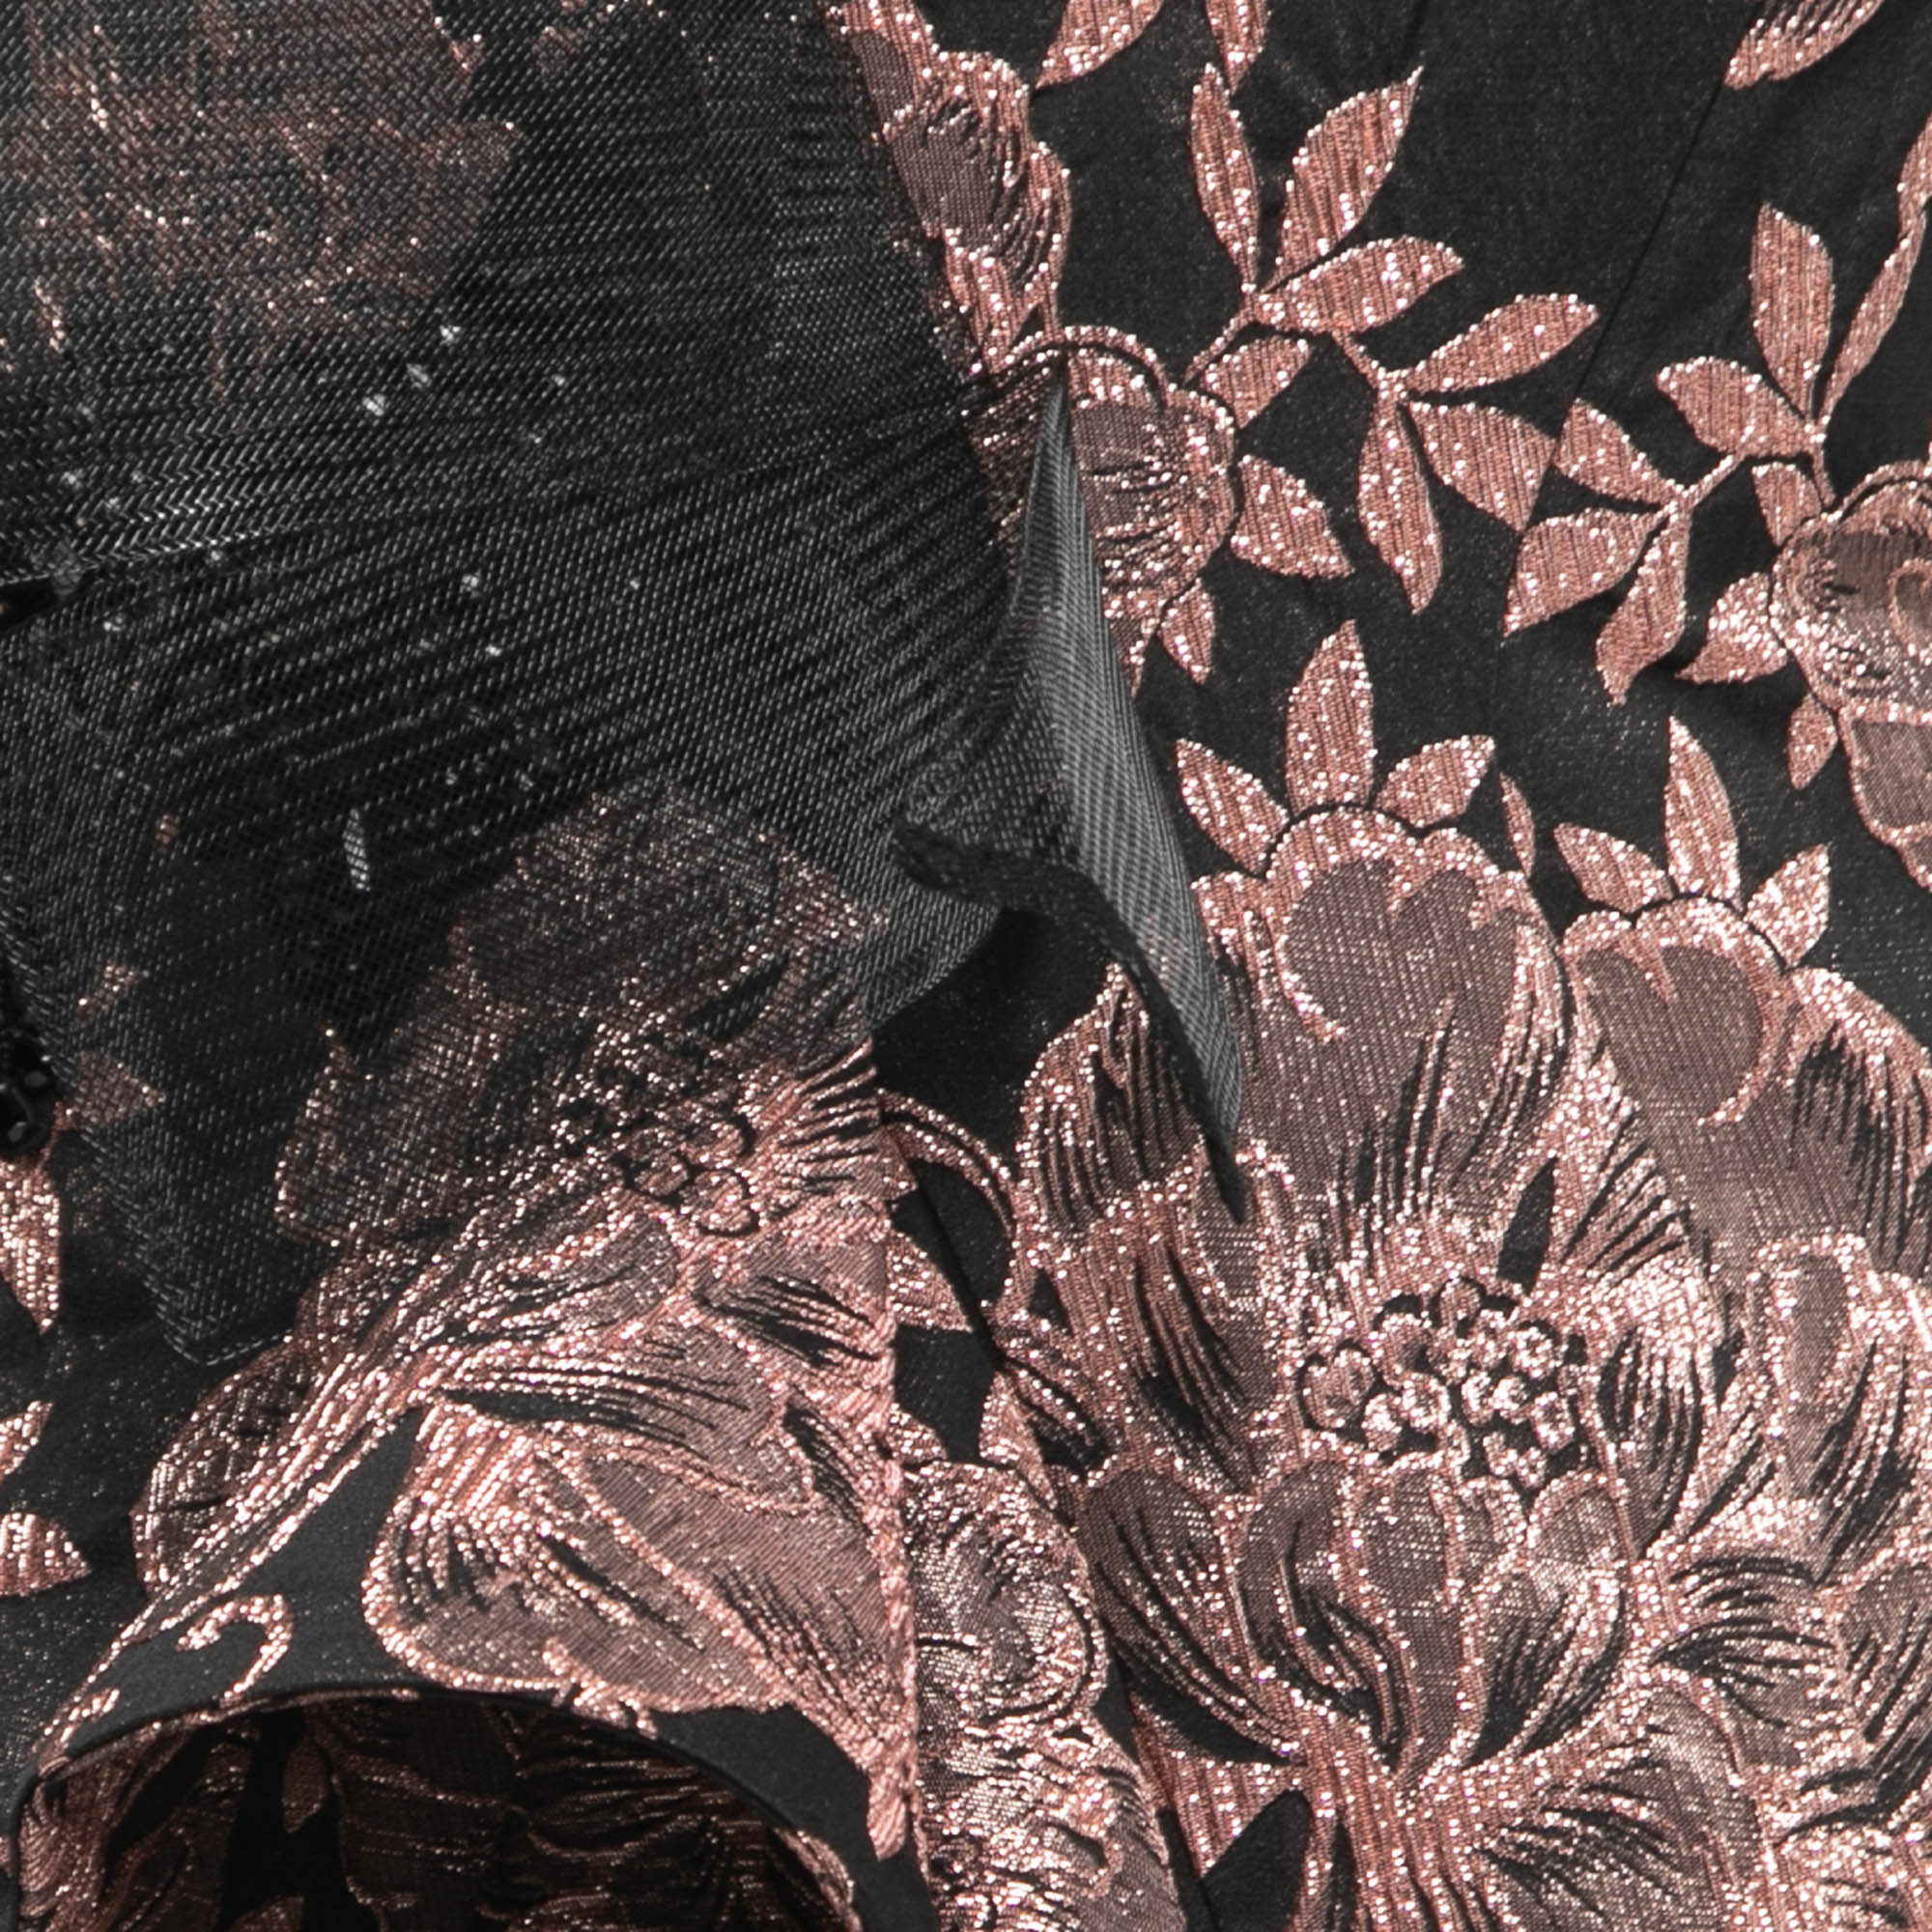 Badgley Mischka Couture Black/Metallic Floral Jacquard Strapless Gown M